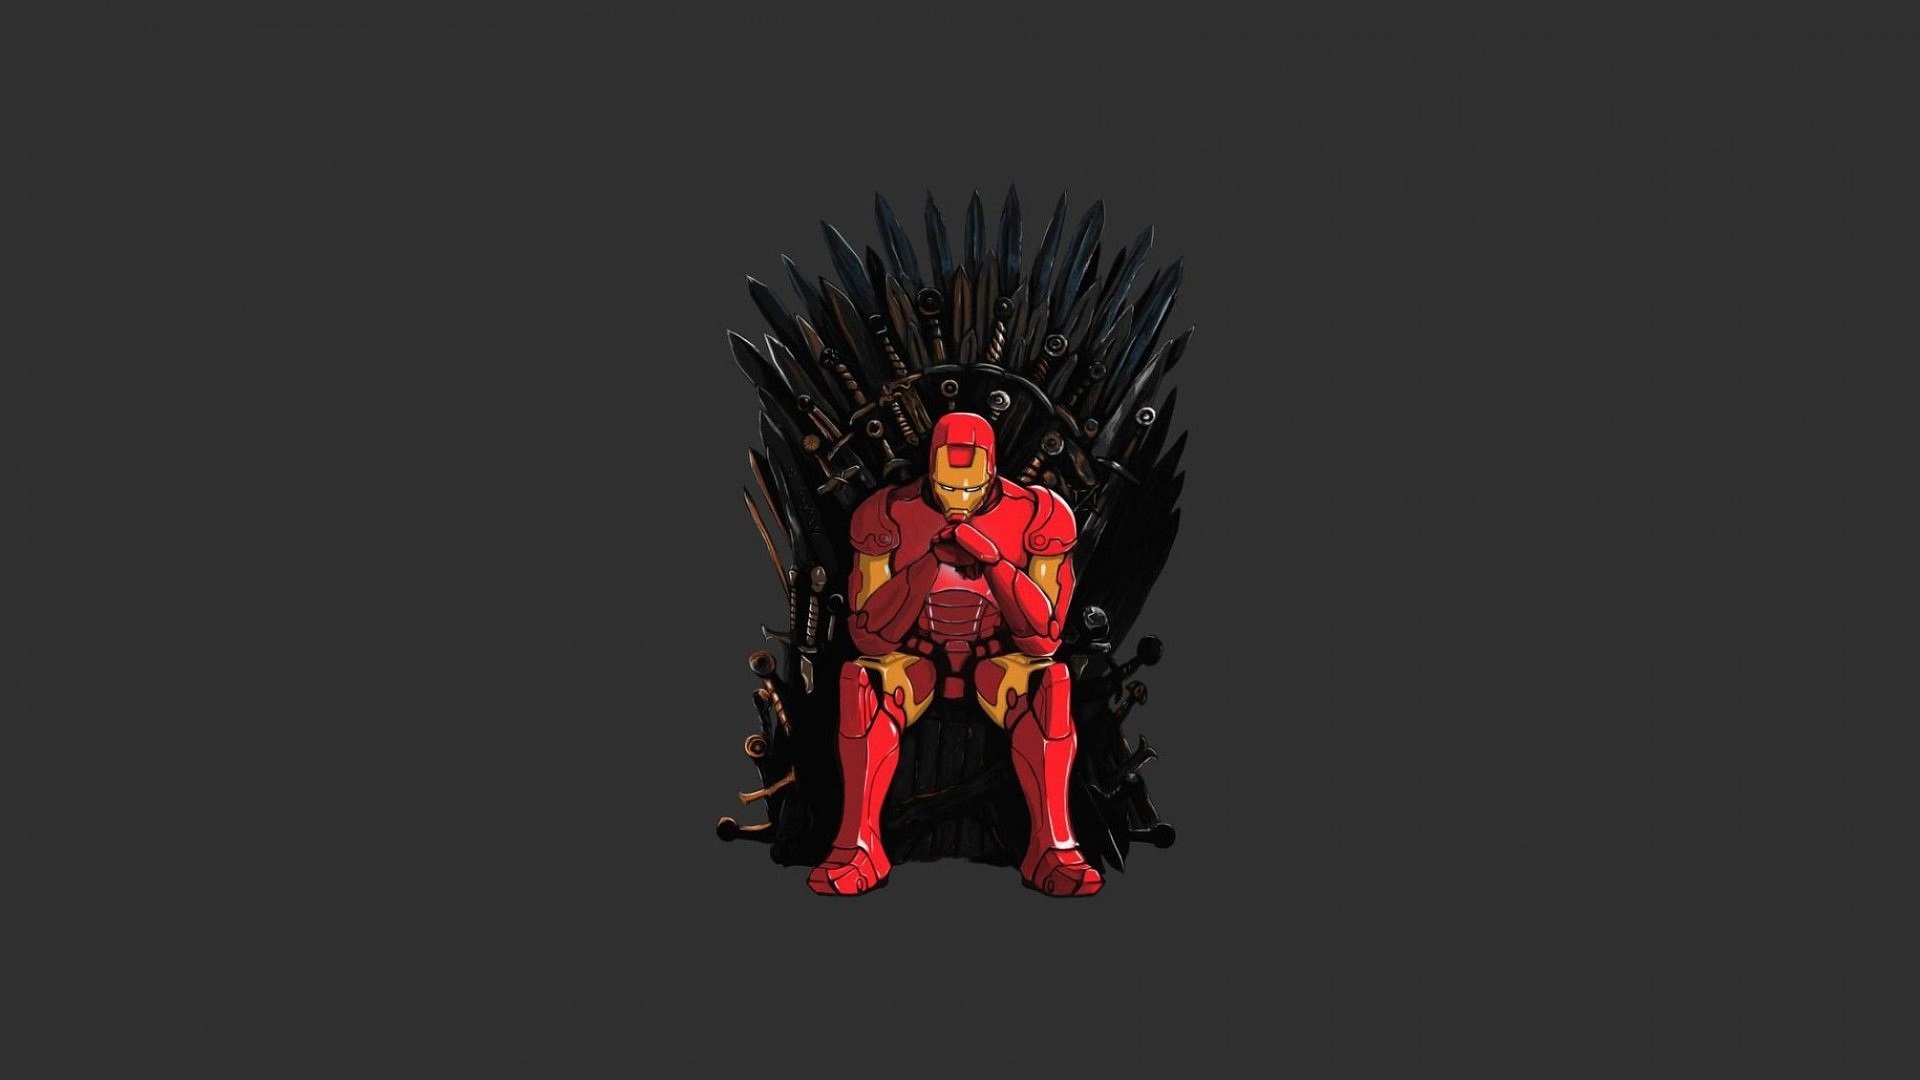 General 1920x1080 Iron Man Game of Thrones Iron Throne crossover minimalism superhero Marvel Comics